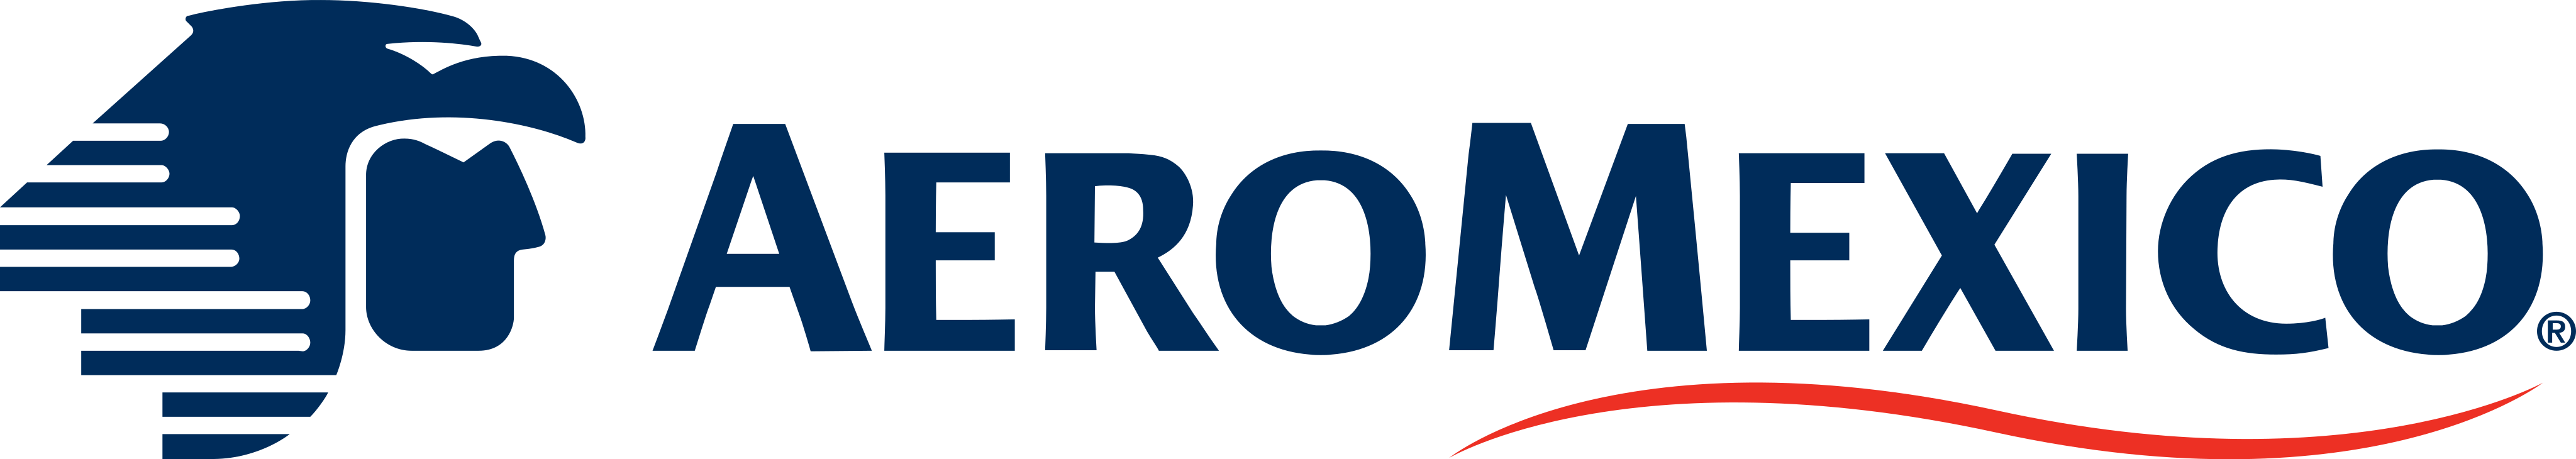 aeromexico logo - Aeromexico Logo